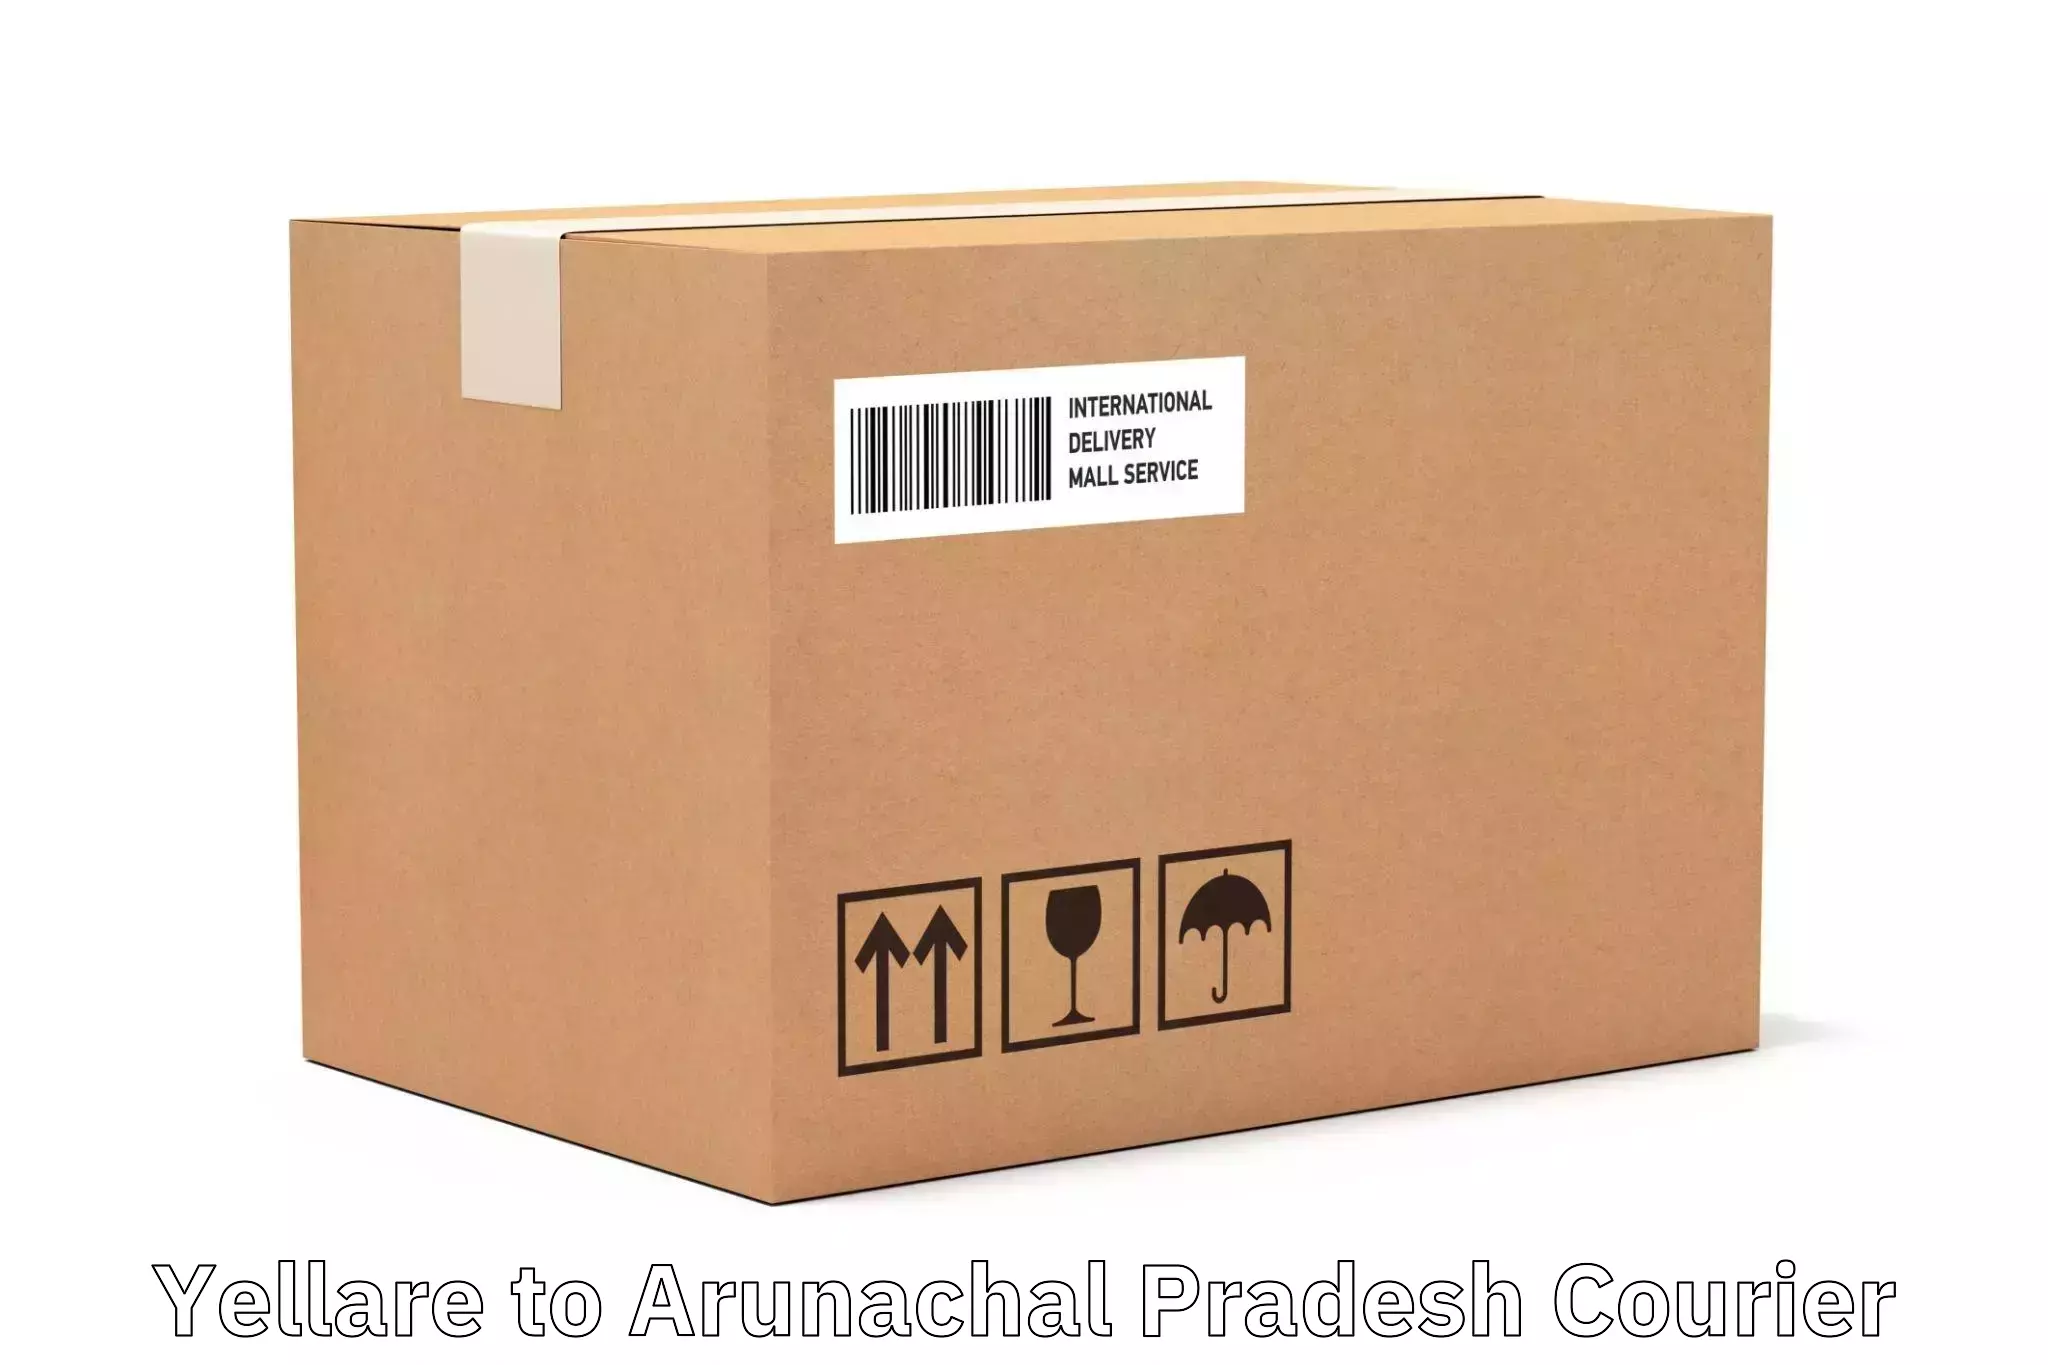 Package delivery network Yellare to Arunachal Pradesh